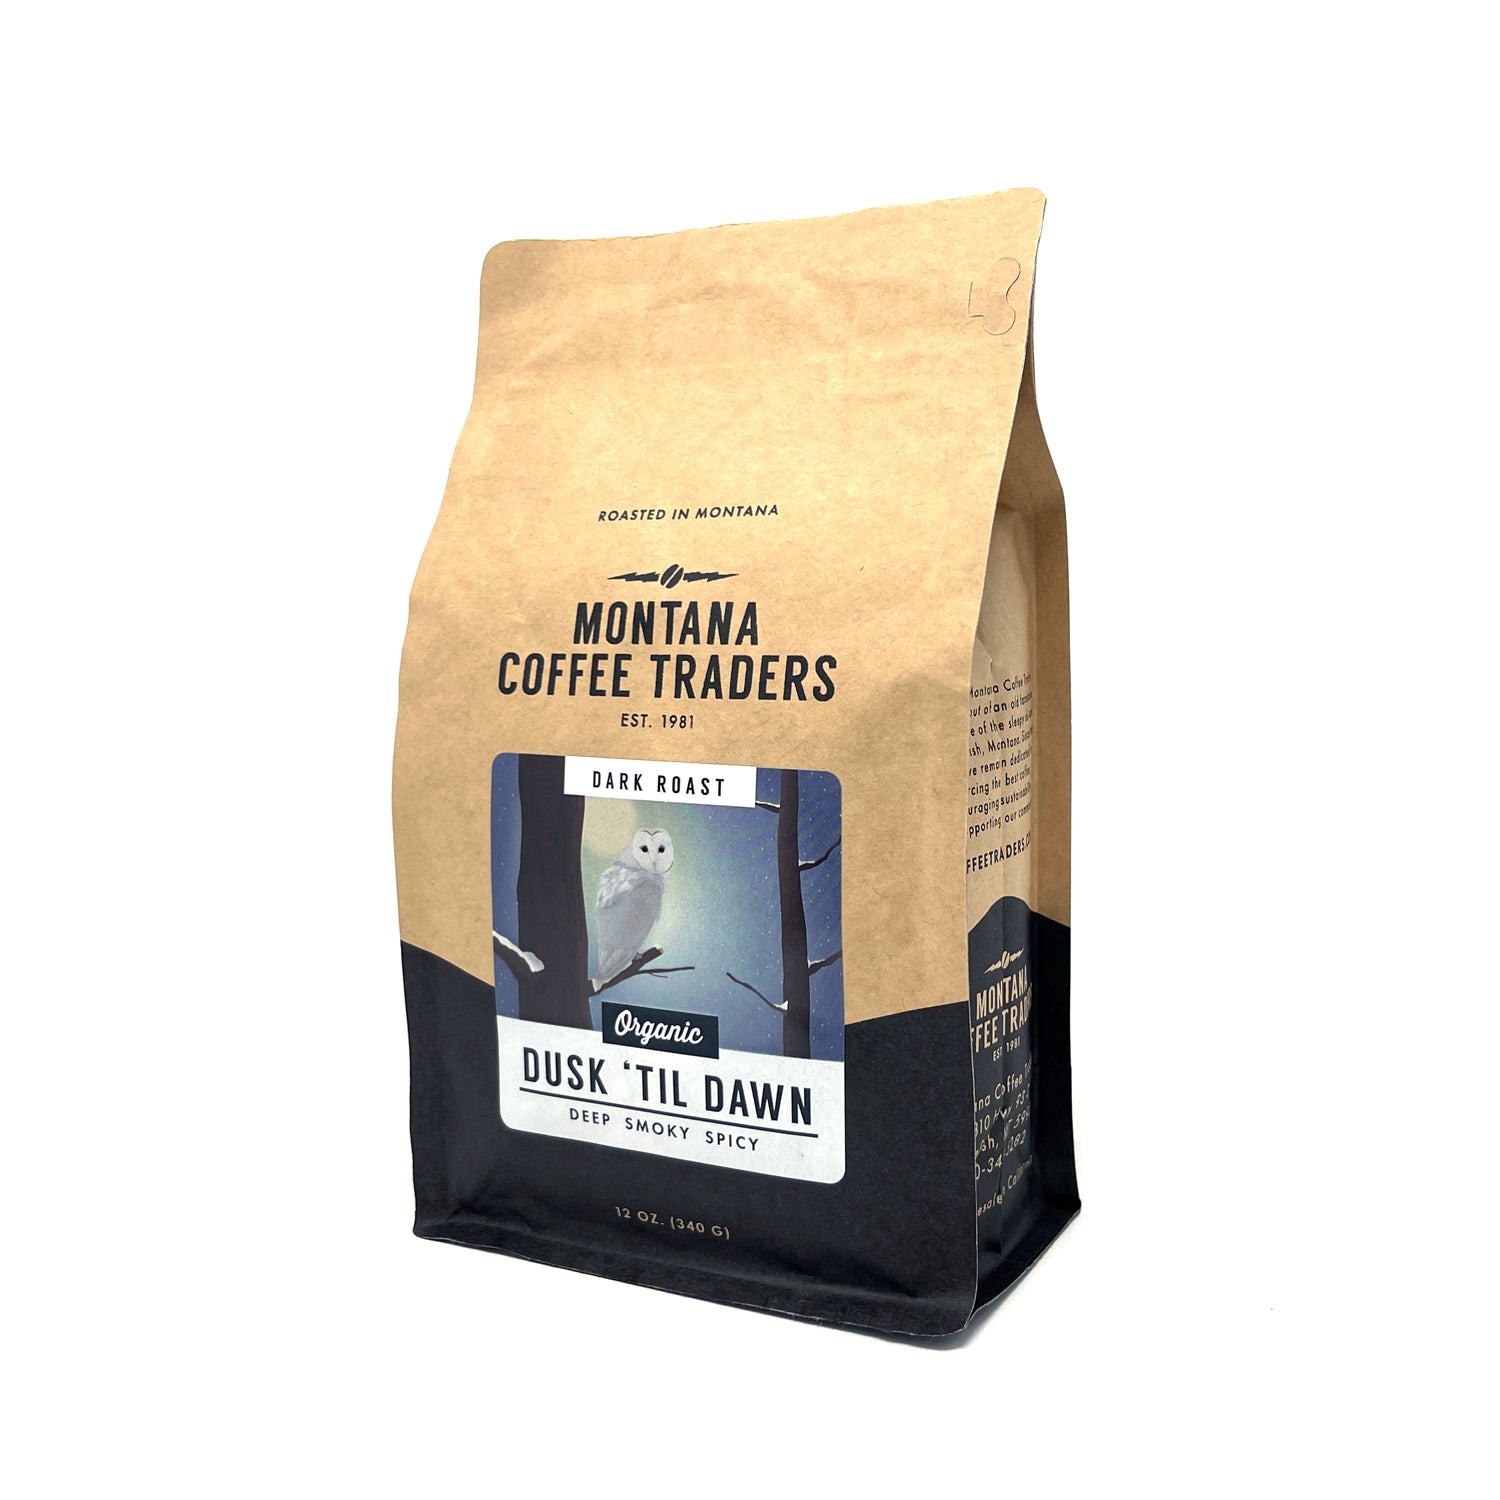 Organic Dusk 'til Dawn – Montana Coffee Traders